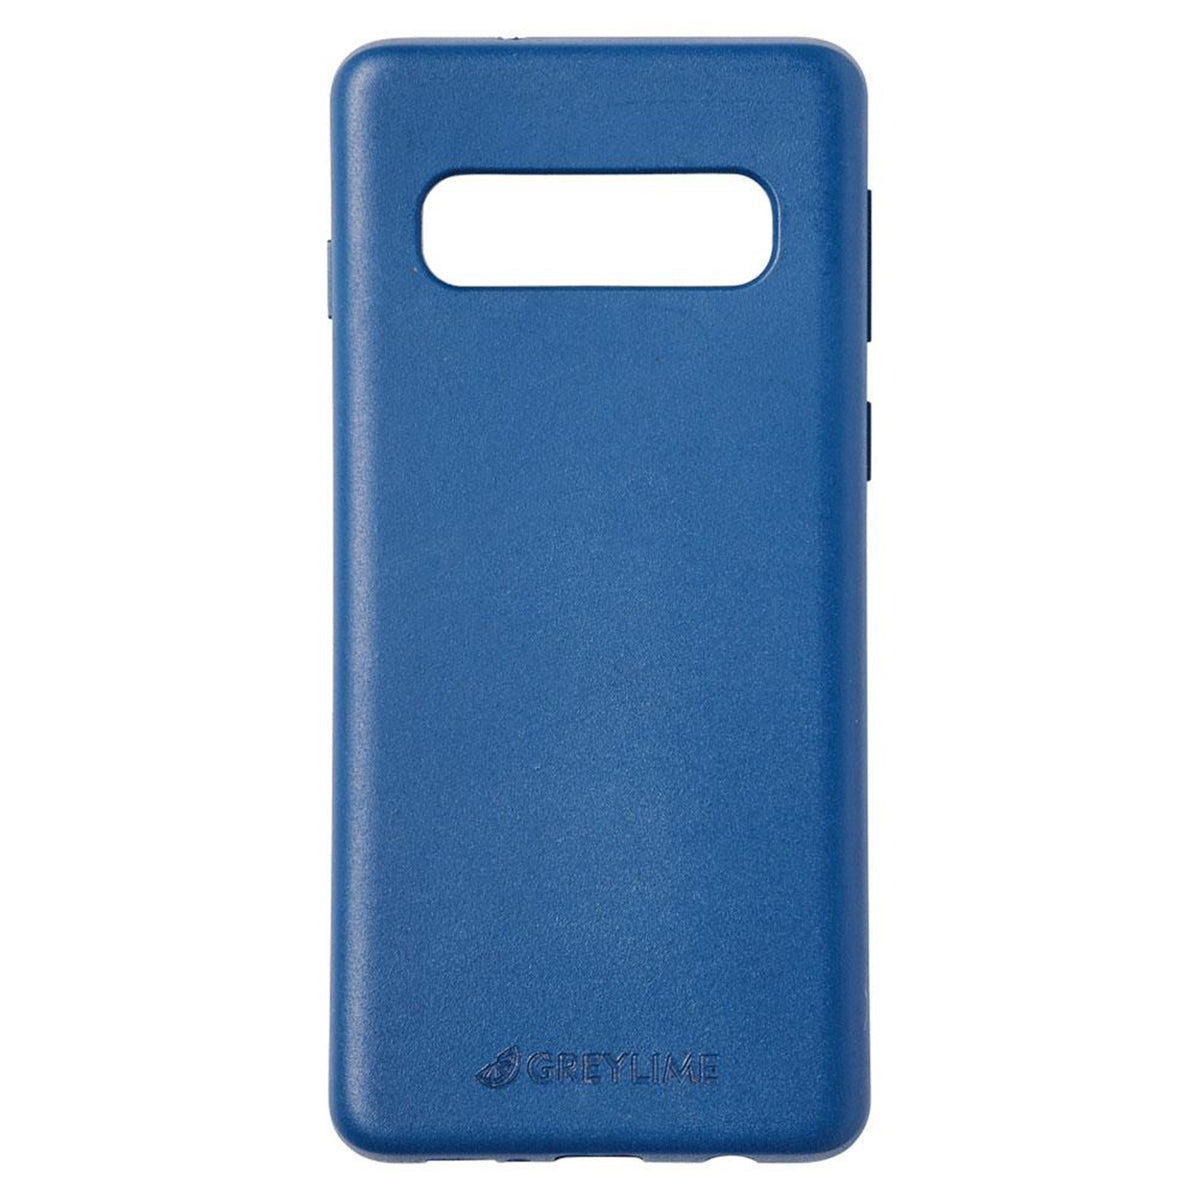 GreyLime-Samsung-Galaxy-S10-biodegradable-cover-Navy-blue-COSAM1003-V4.jpg